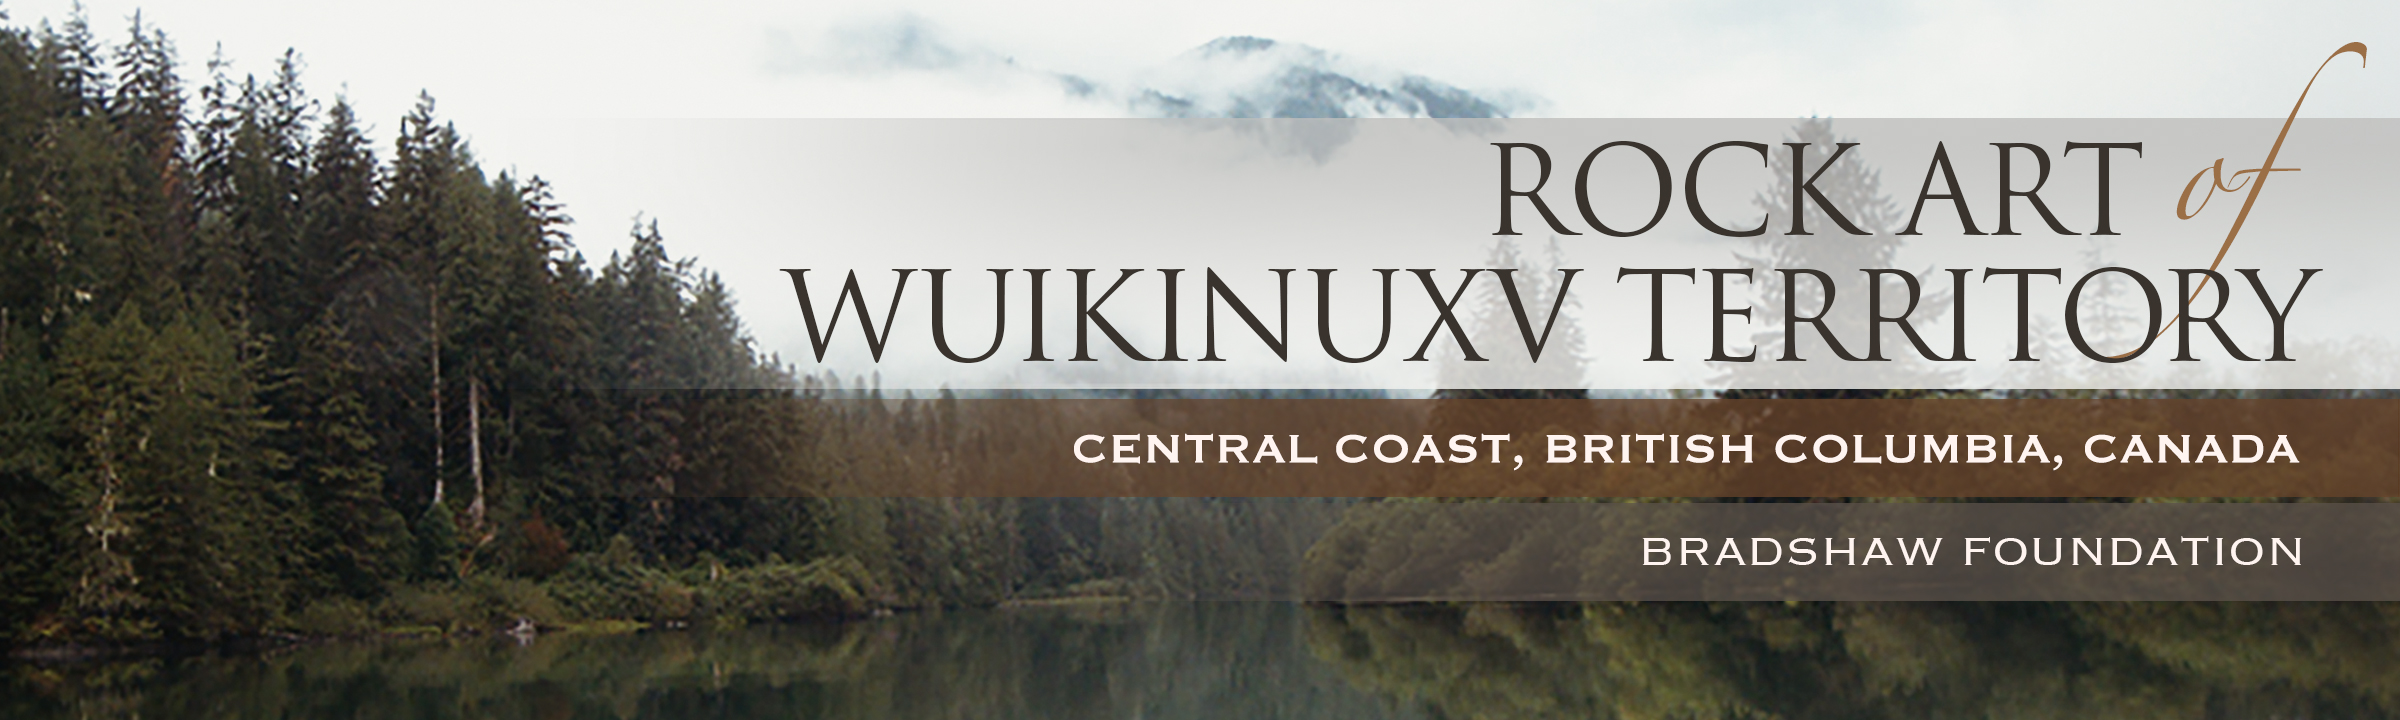 Rock Art of Wuikinuxv Territory Canada